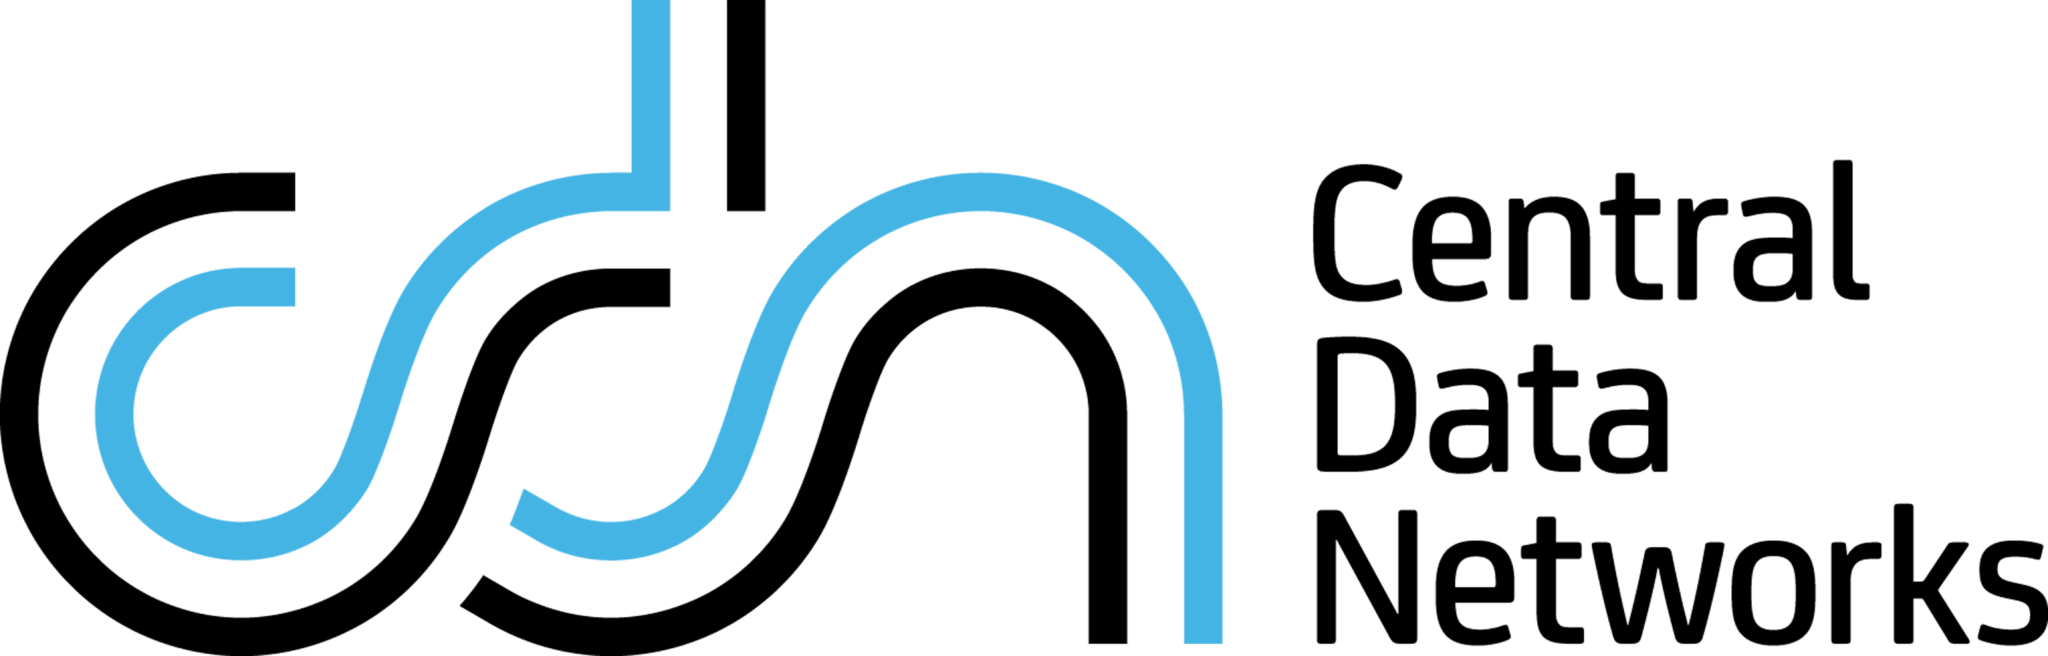 Central Data Networks Logo